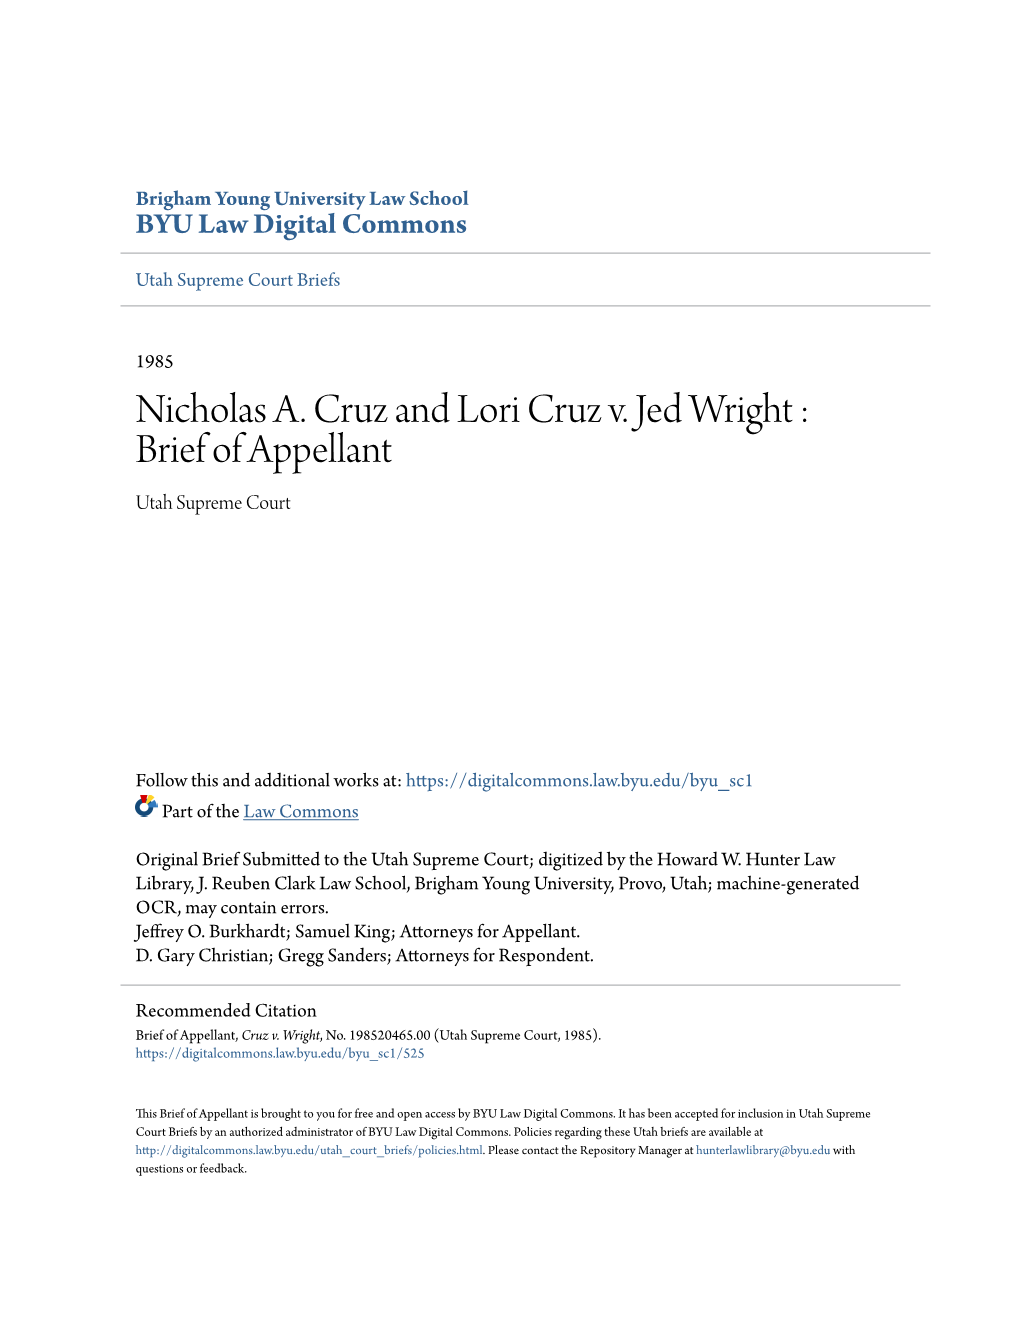 Nicholas A. Cruz and Lori Cruz V. Jed Wright : Brief of Appellant Utah Supreme Court